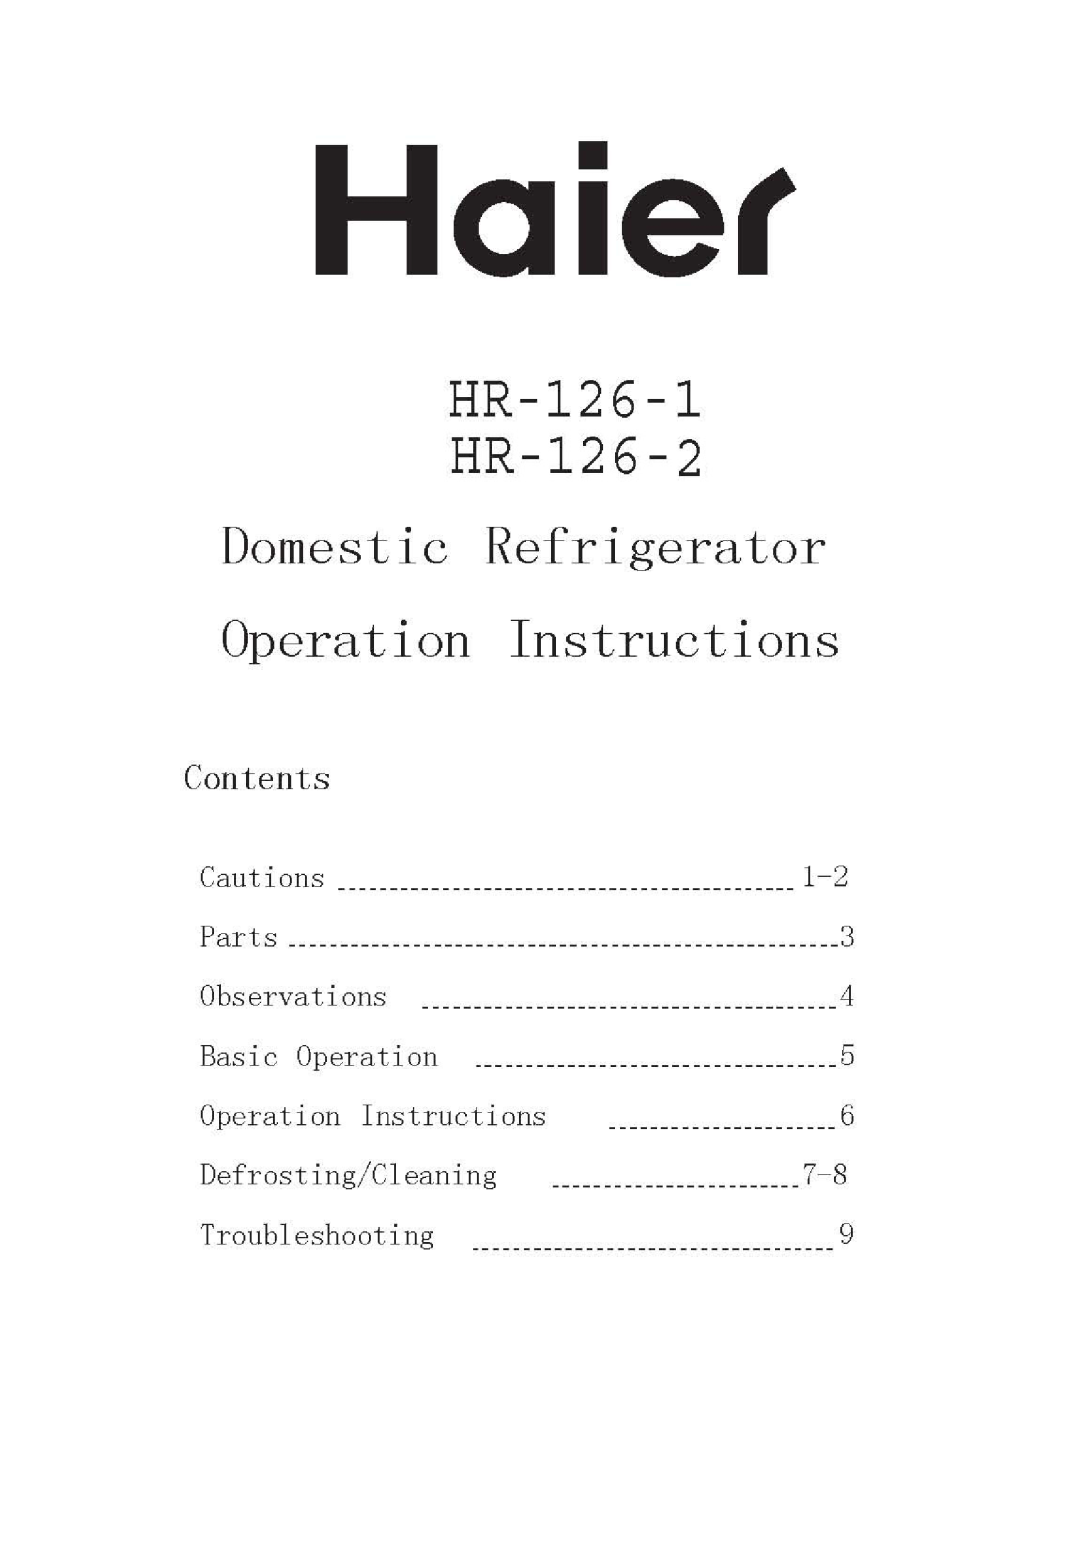 Haier HR-126-2, HR-126-1 manual 